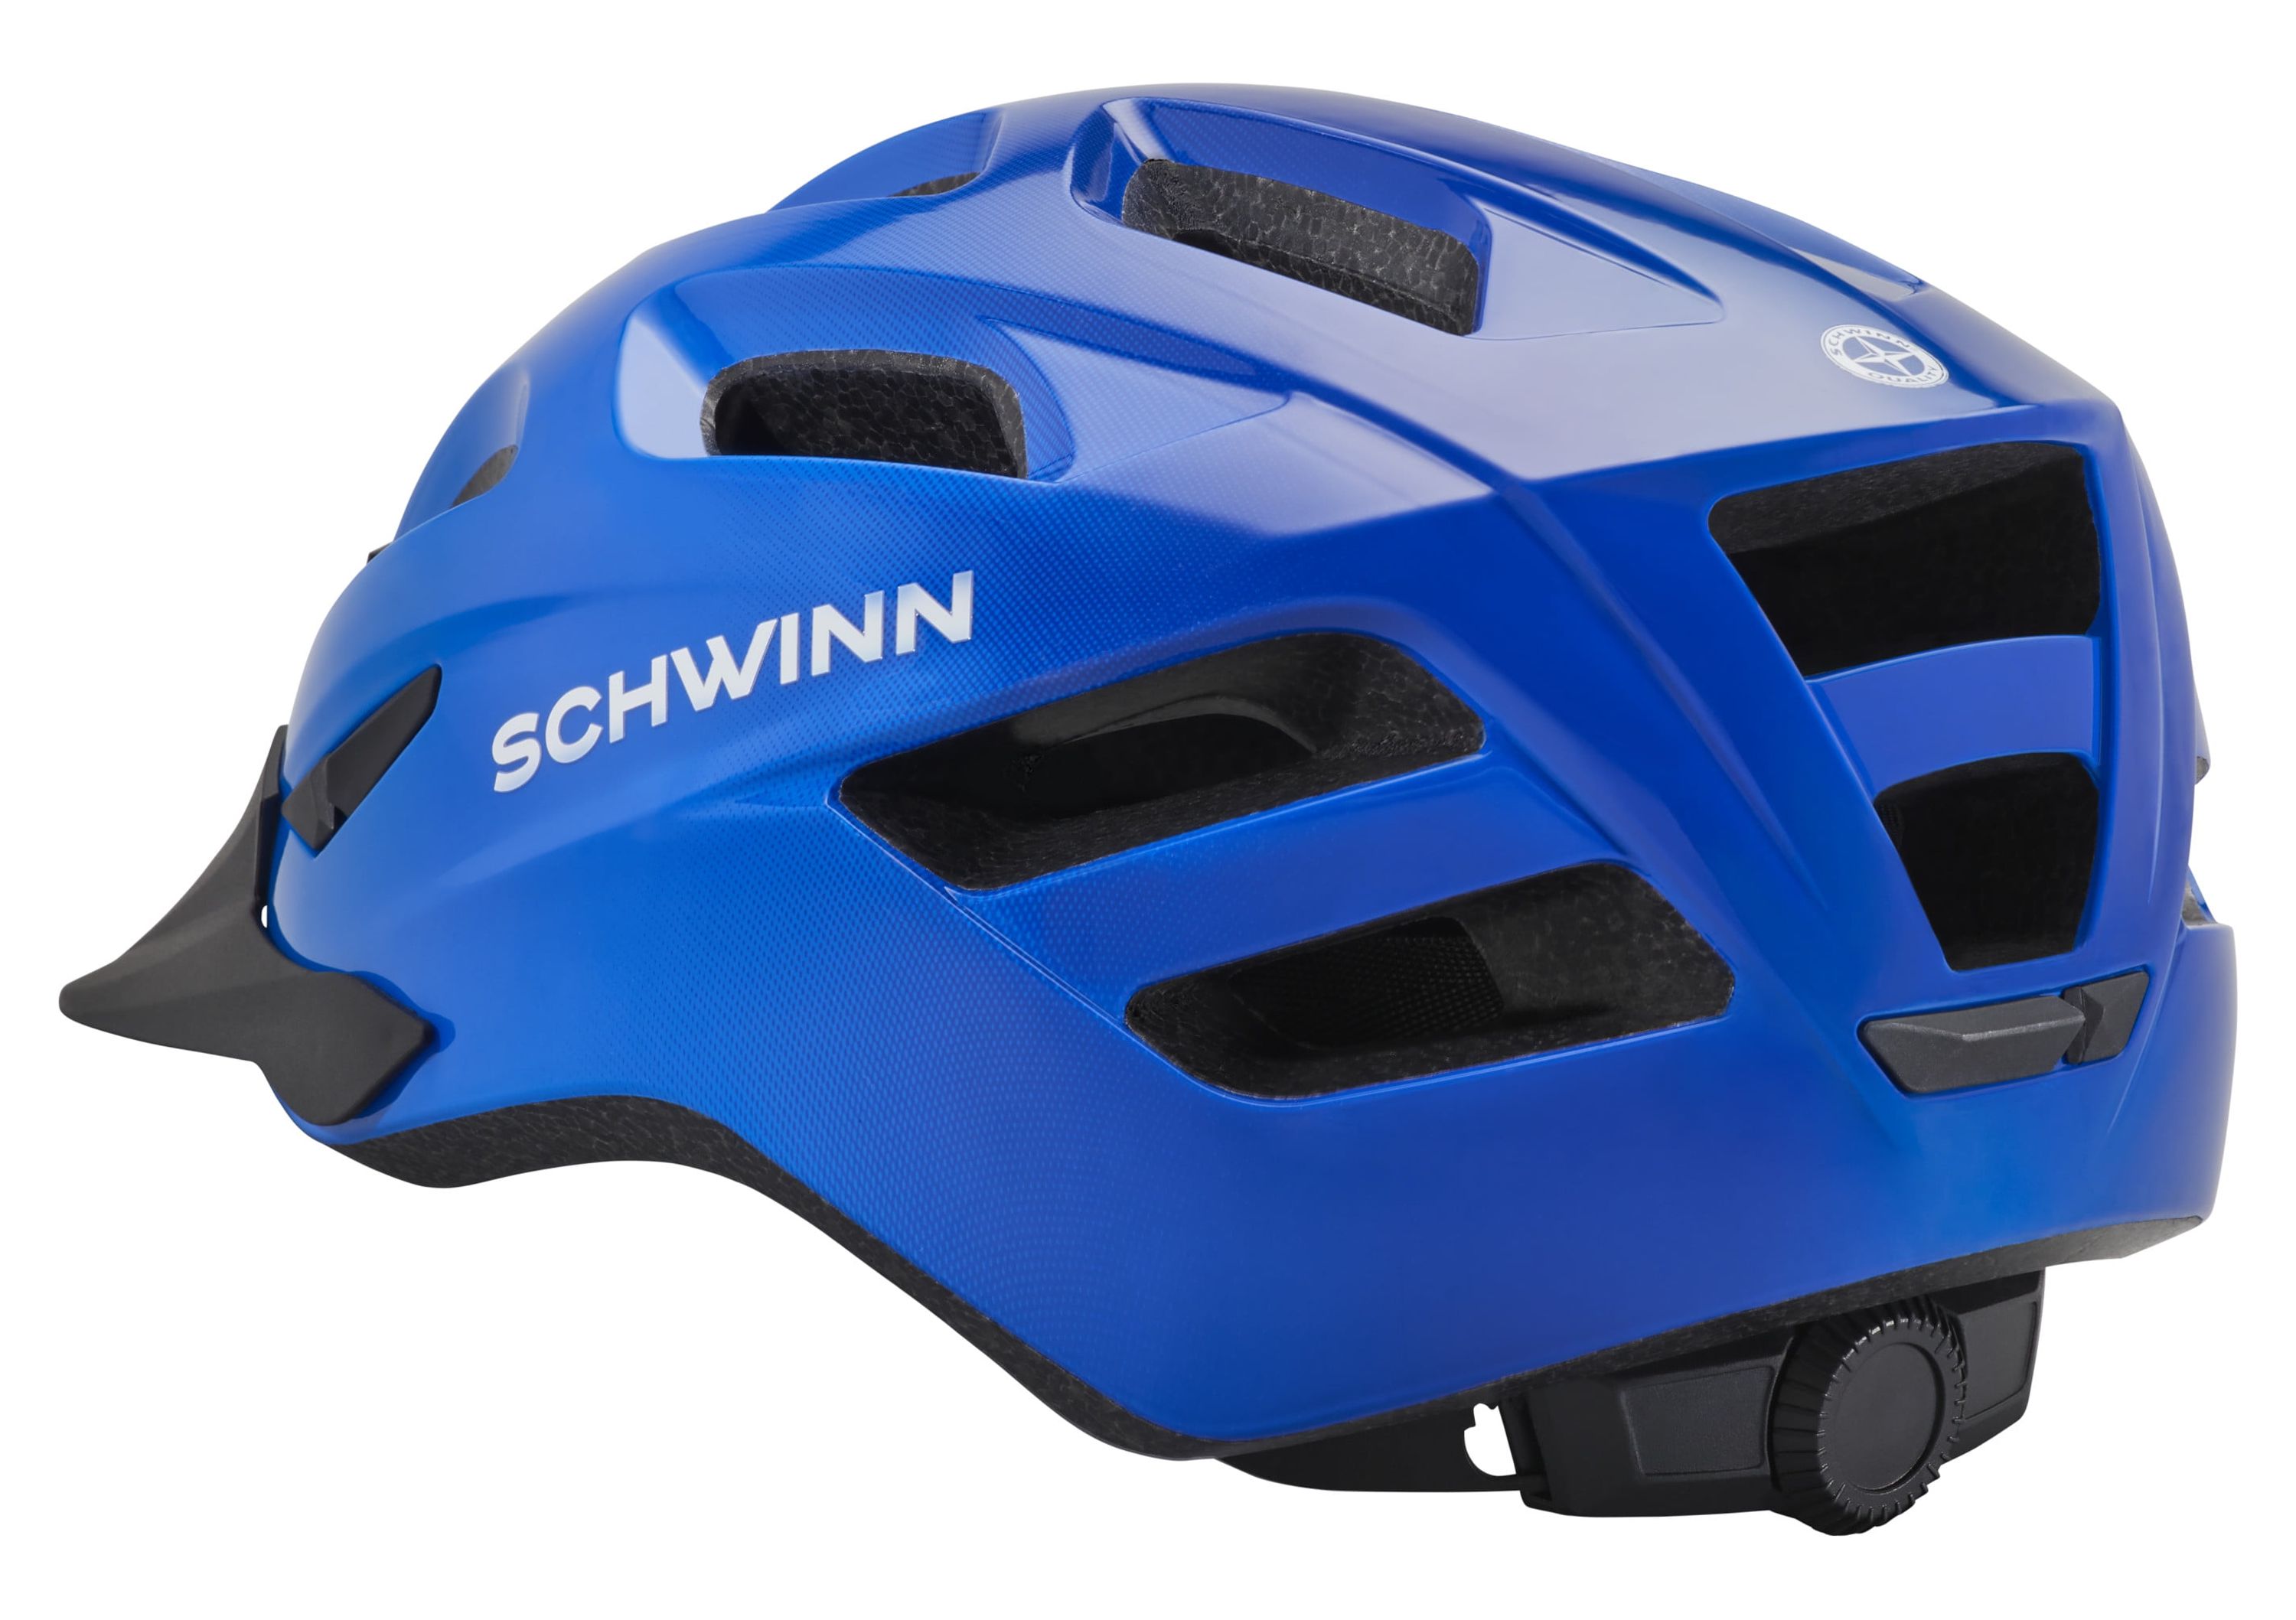 Schwinn Outlook Adult Helmet, Ages 14+, Blue - image 2 of 6